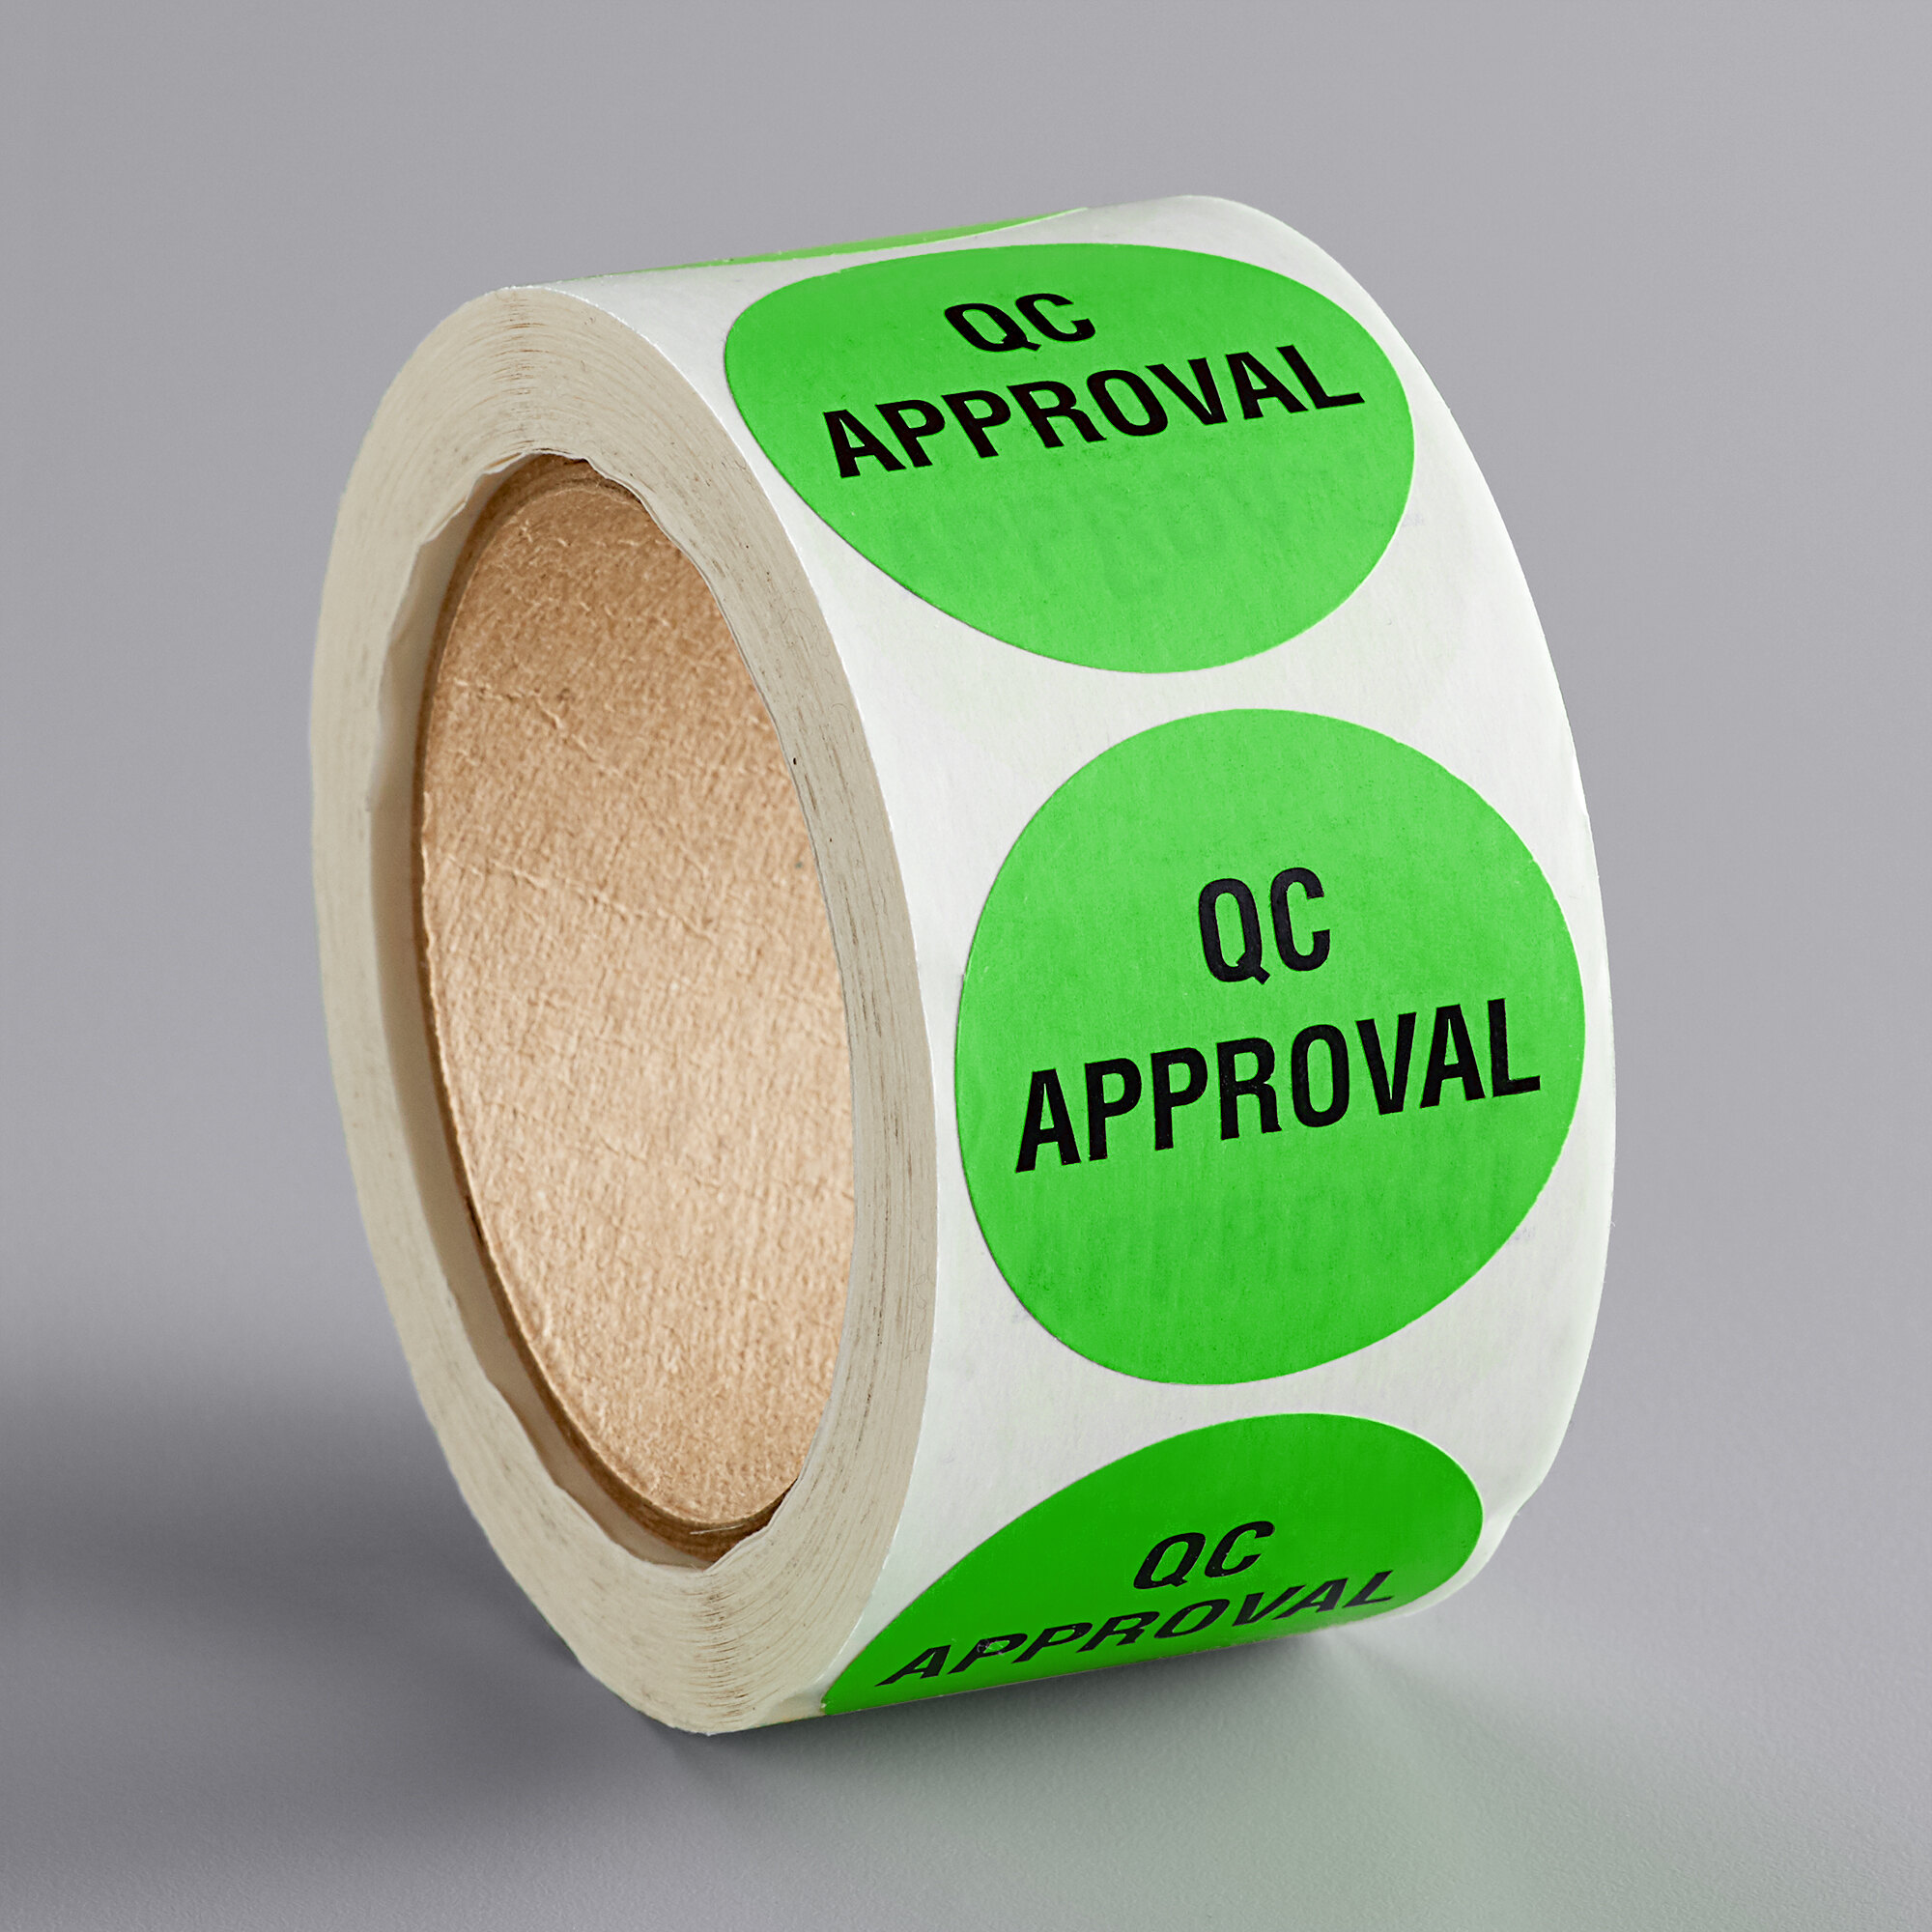 Lavex Industrial 2 Qc Approval Green Matte Paper Permanent Label 500